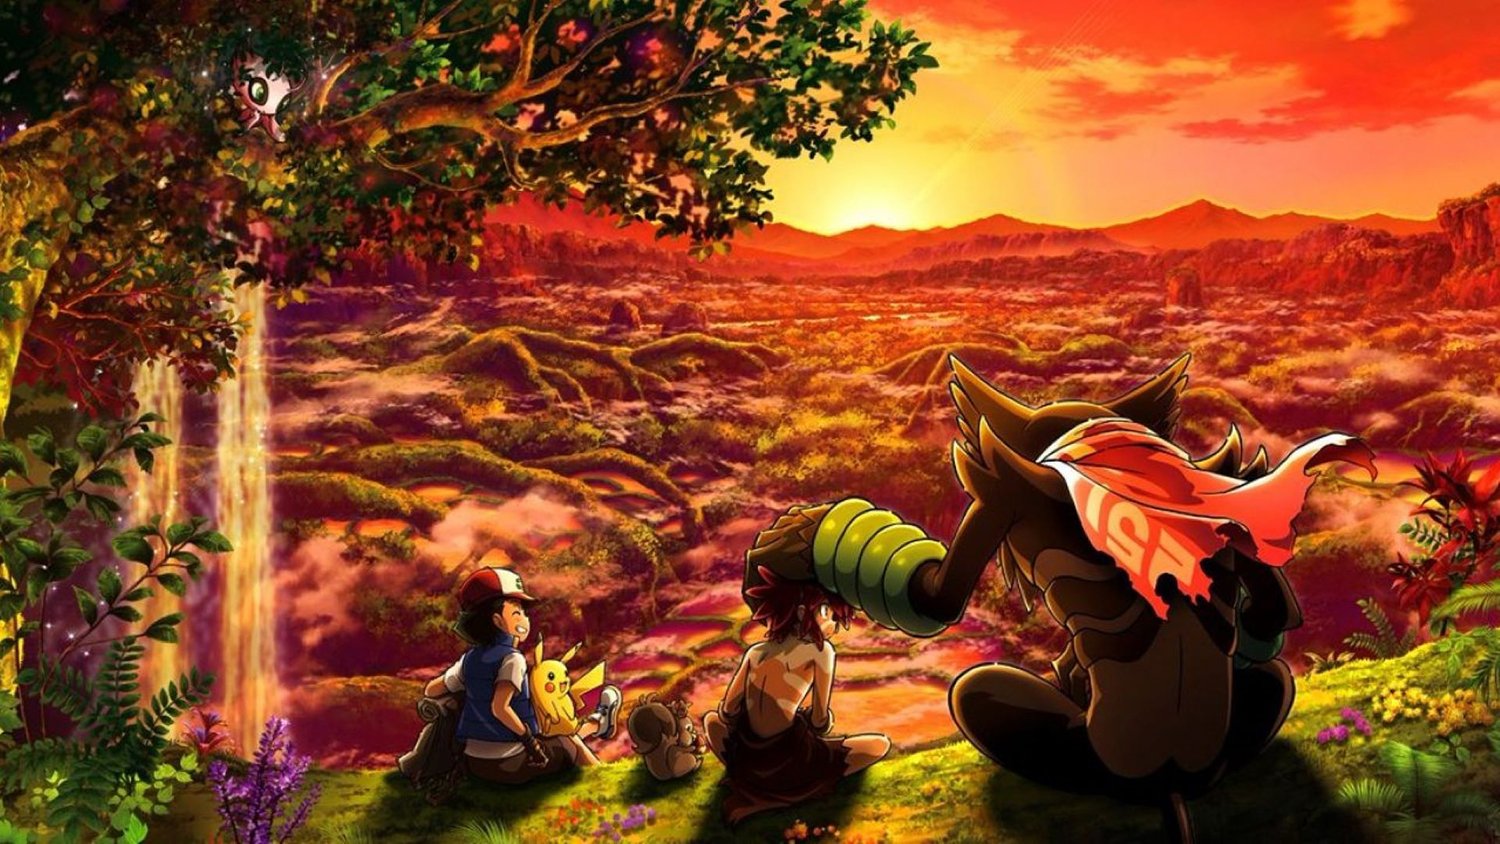 Pokémon the Movie: Secrets of the Jungle cover art